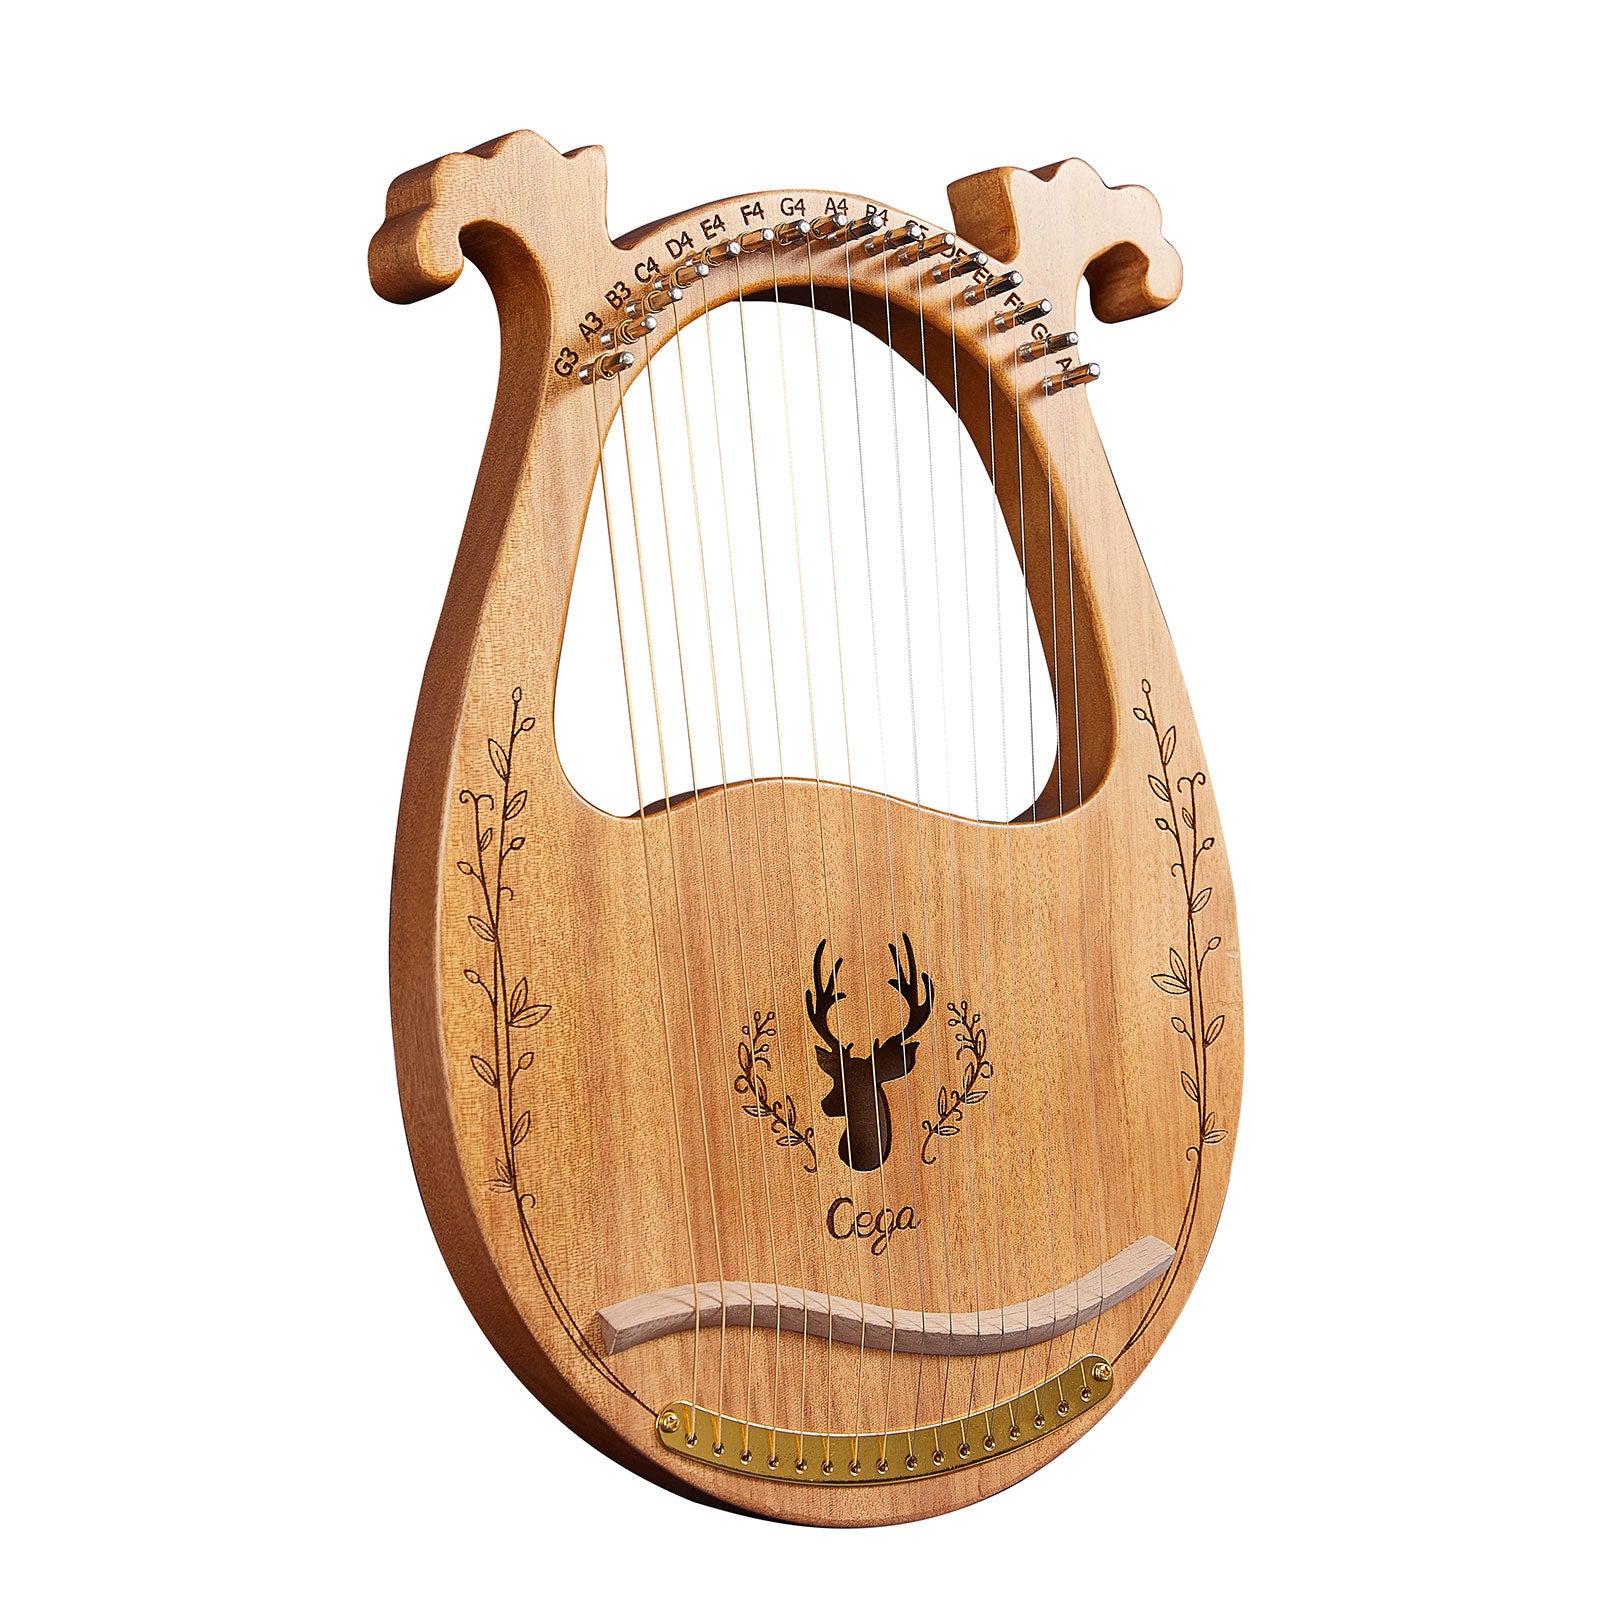 Cega 19-String 16-String Deer Lyre Harp Resonance Box Instrument